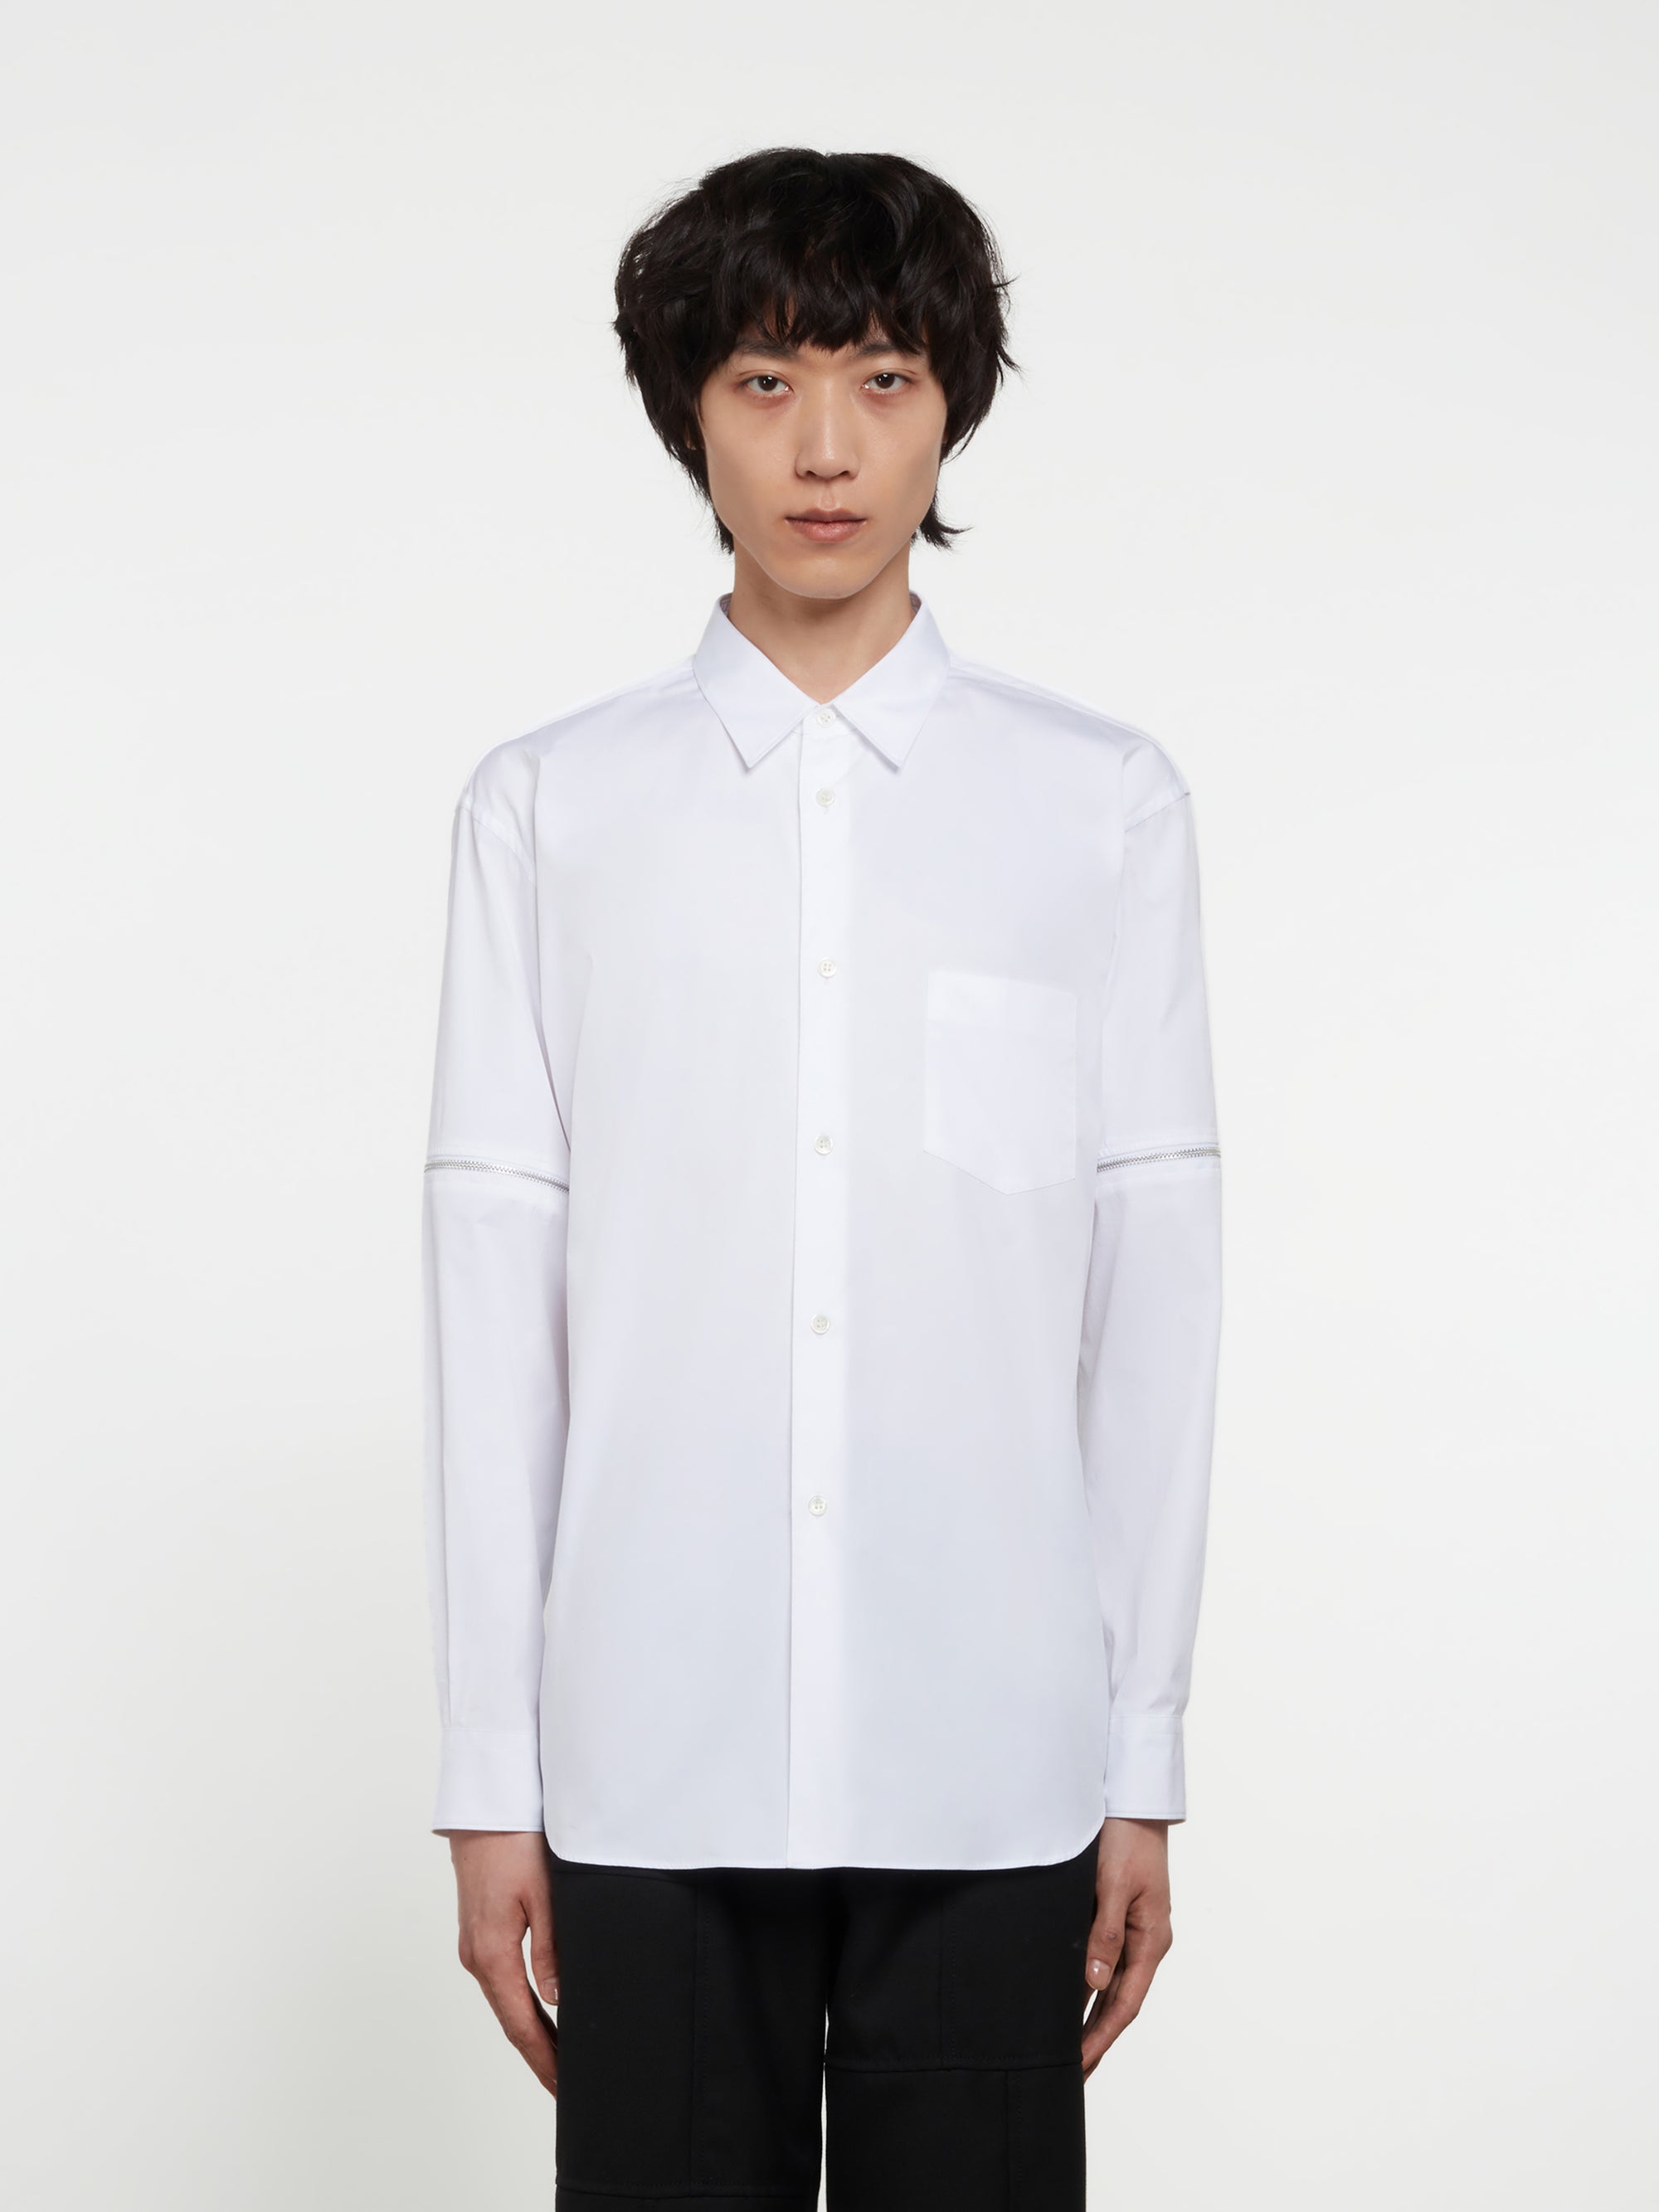 CDG Shirt - Men's Zip Off Sleeve Shirt - (White) view 1